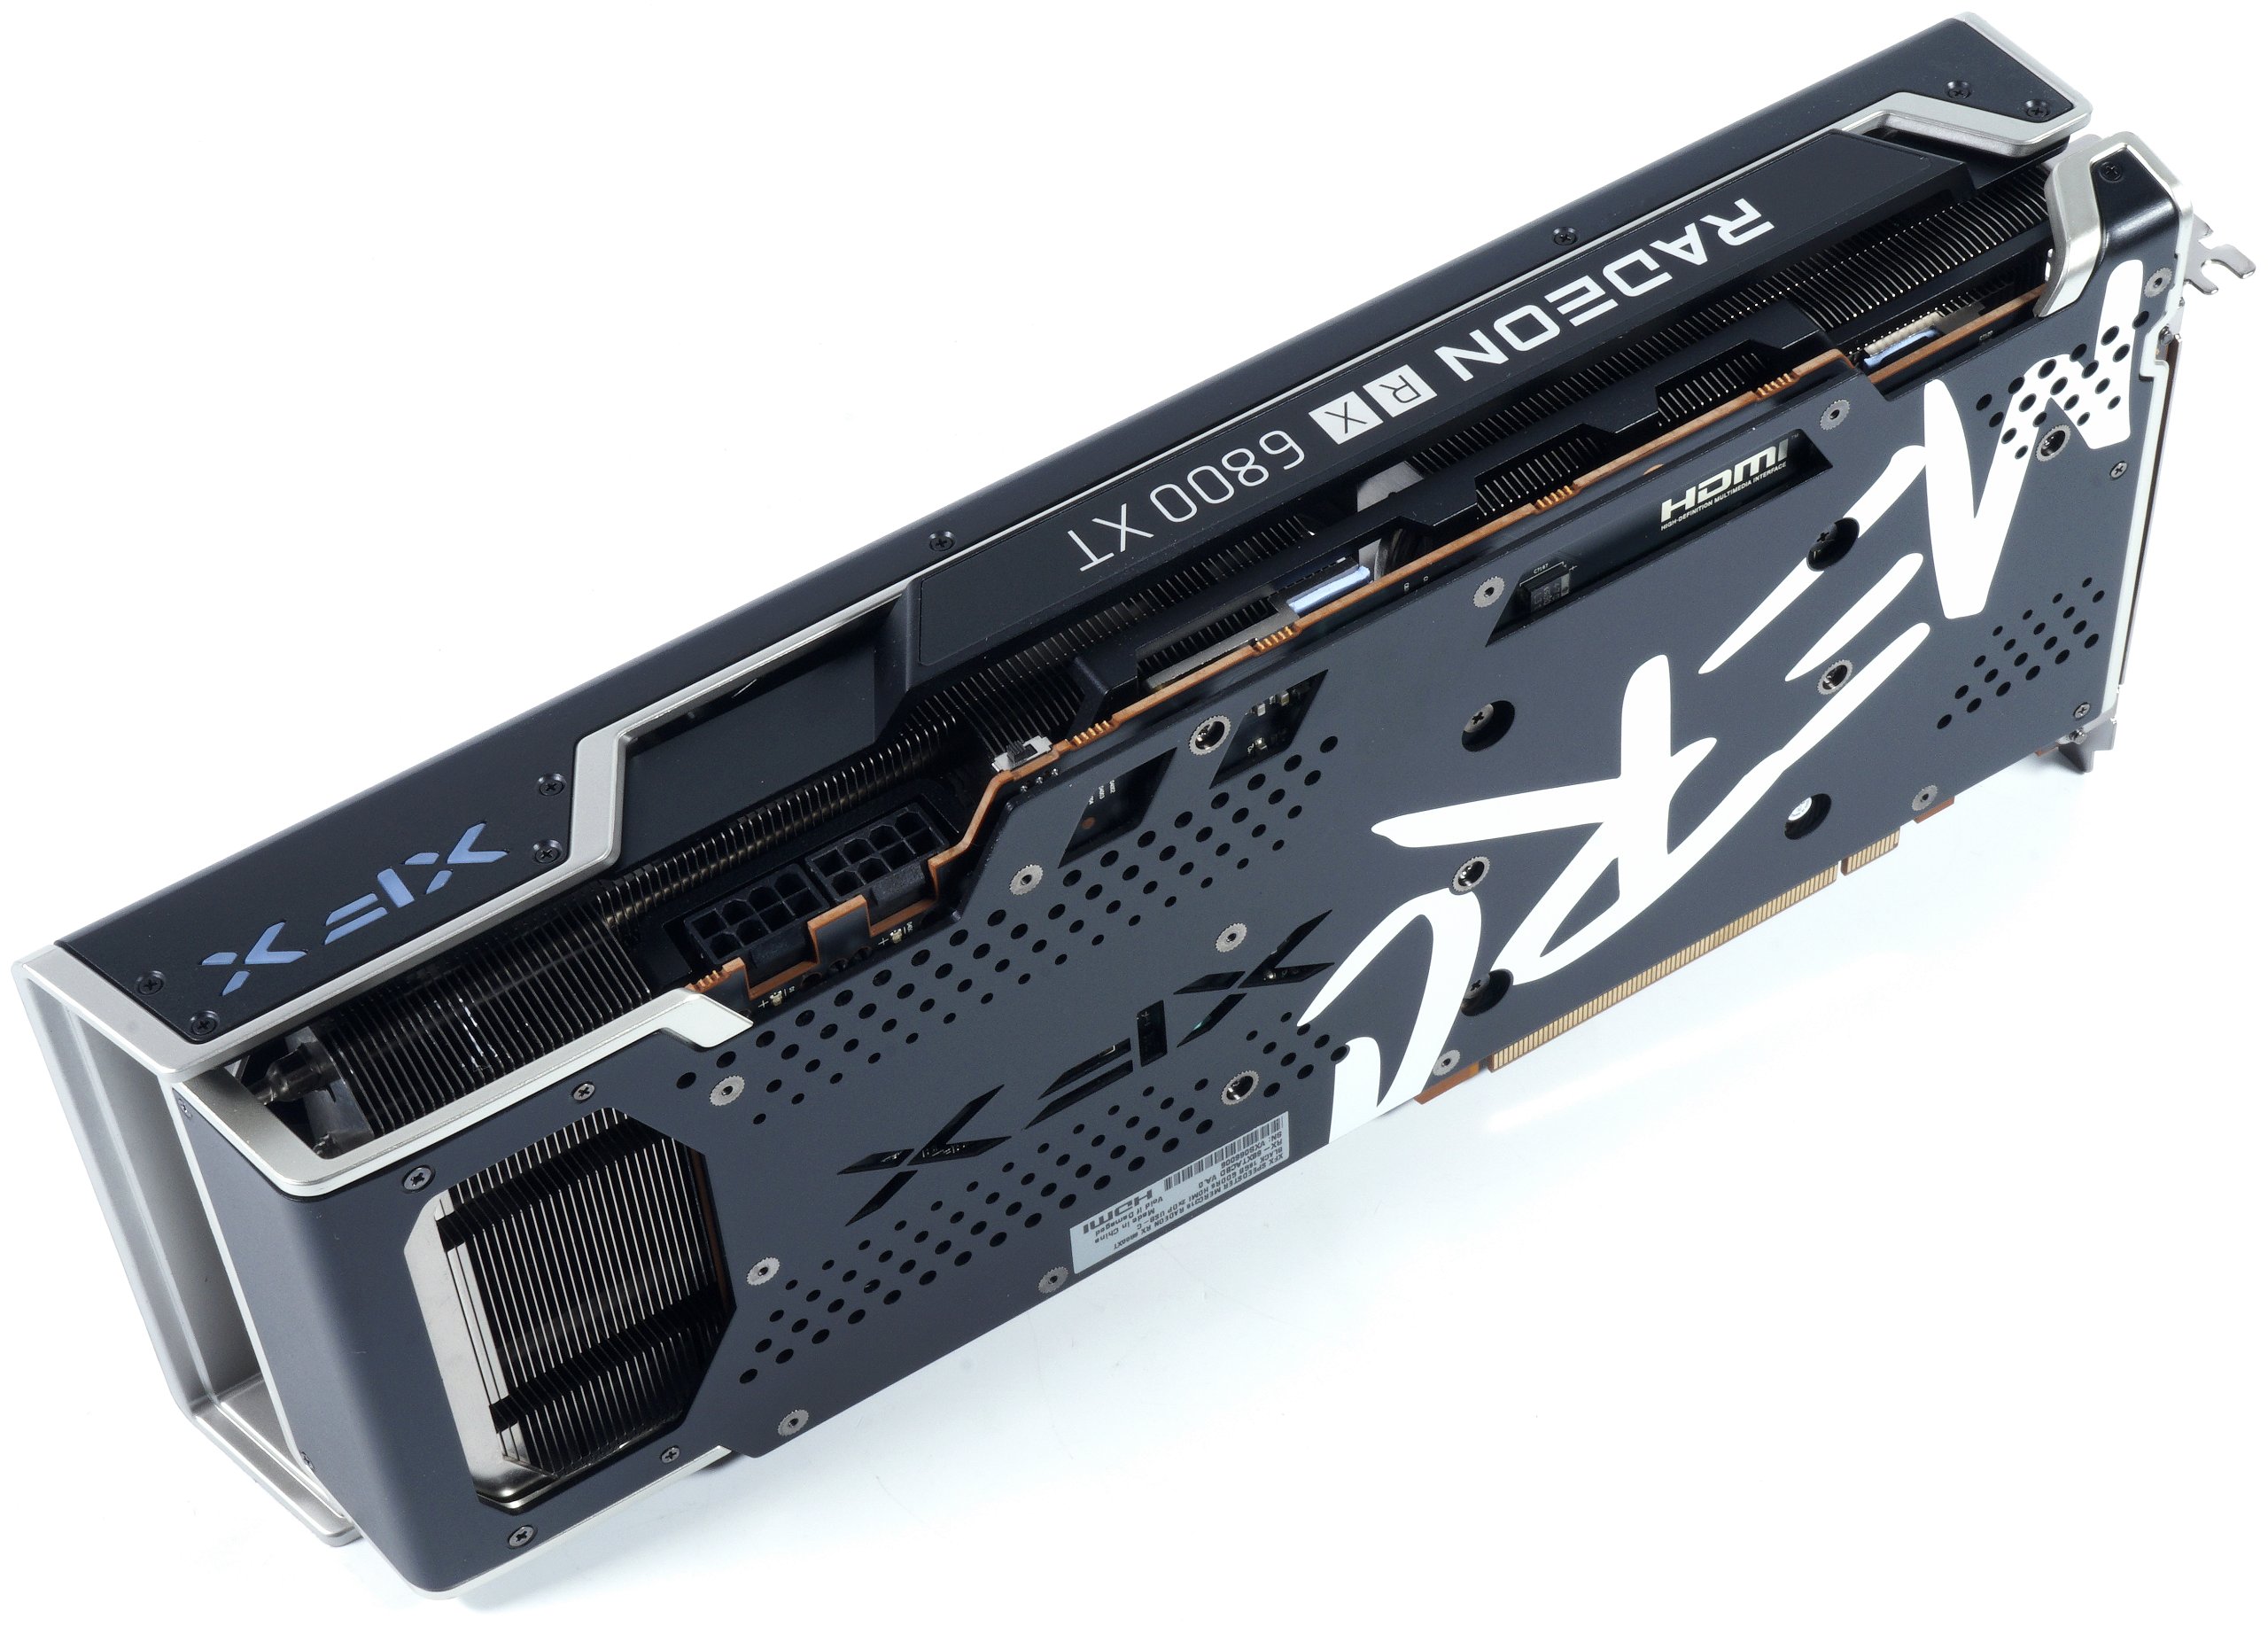 XFX RX 6800 XT Merc 319 16 GB Review - Heavyweight and ultra silent